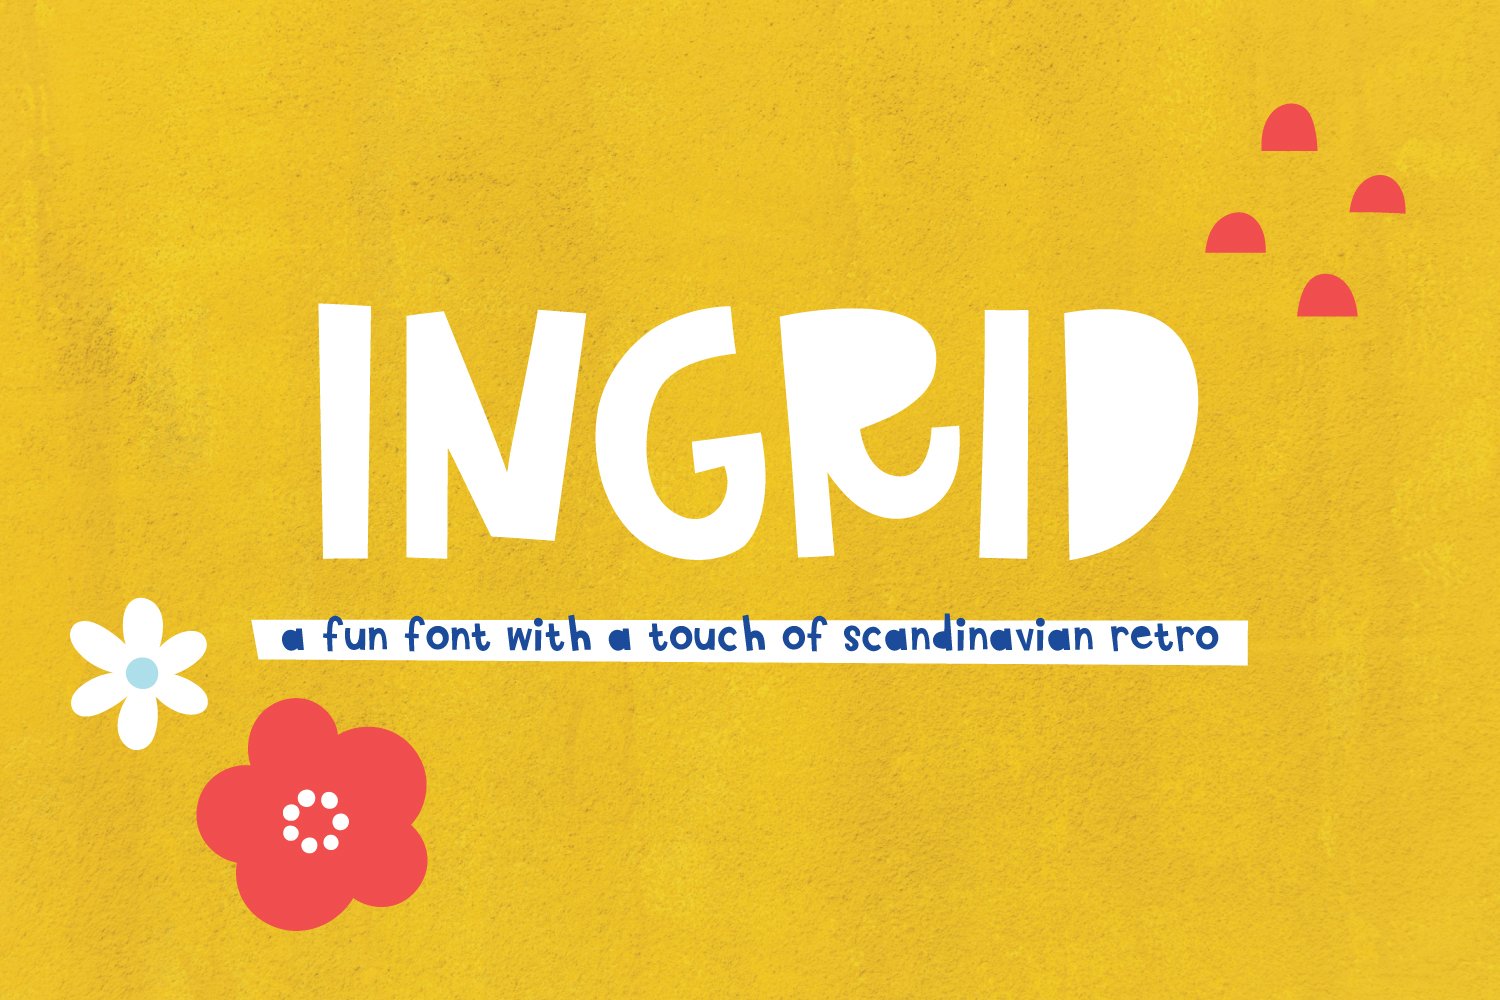 Ingrid cover image.